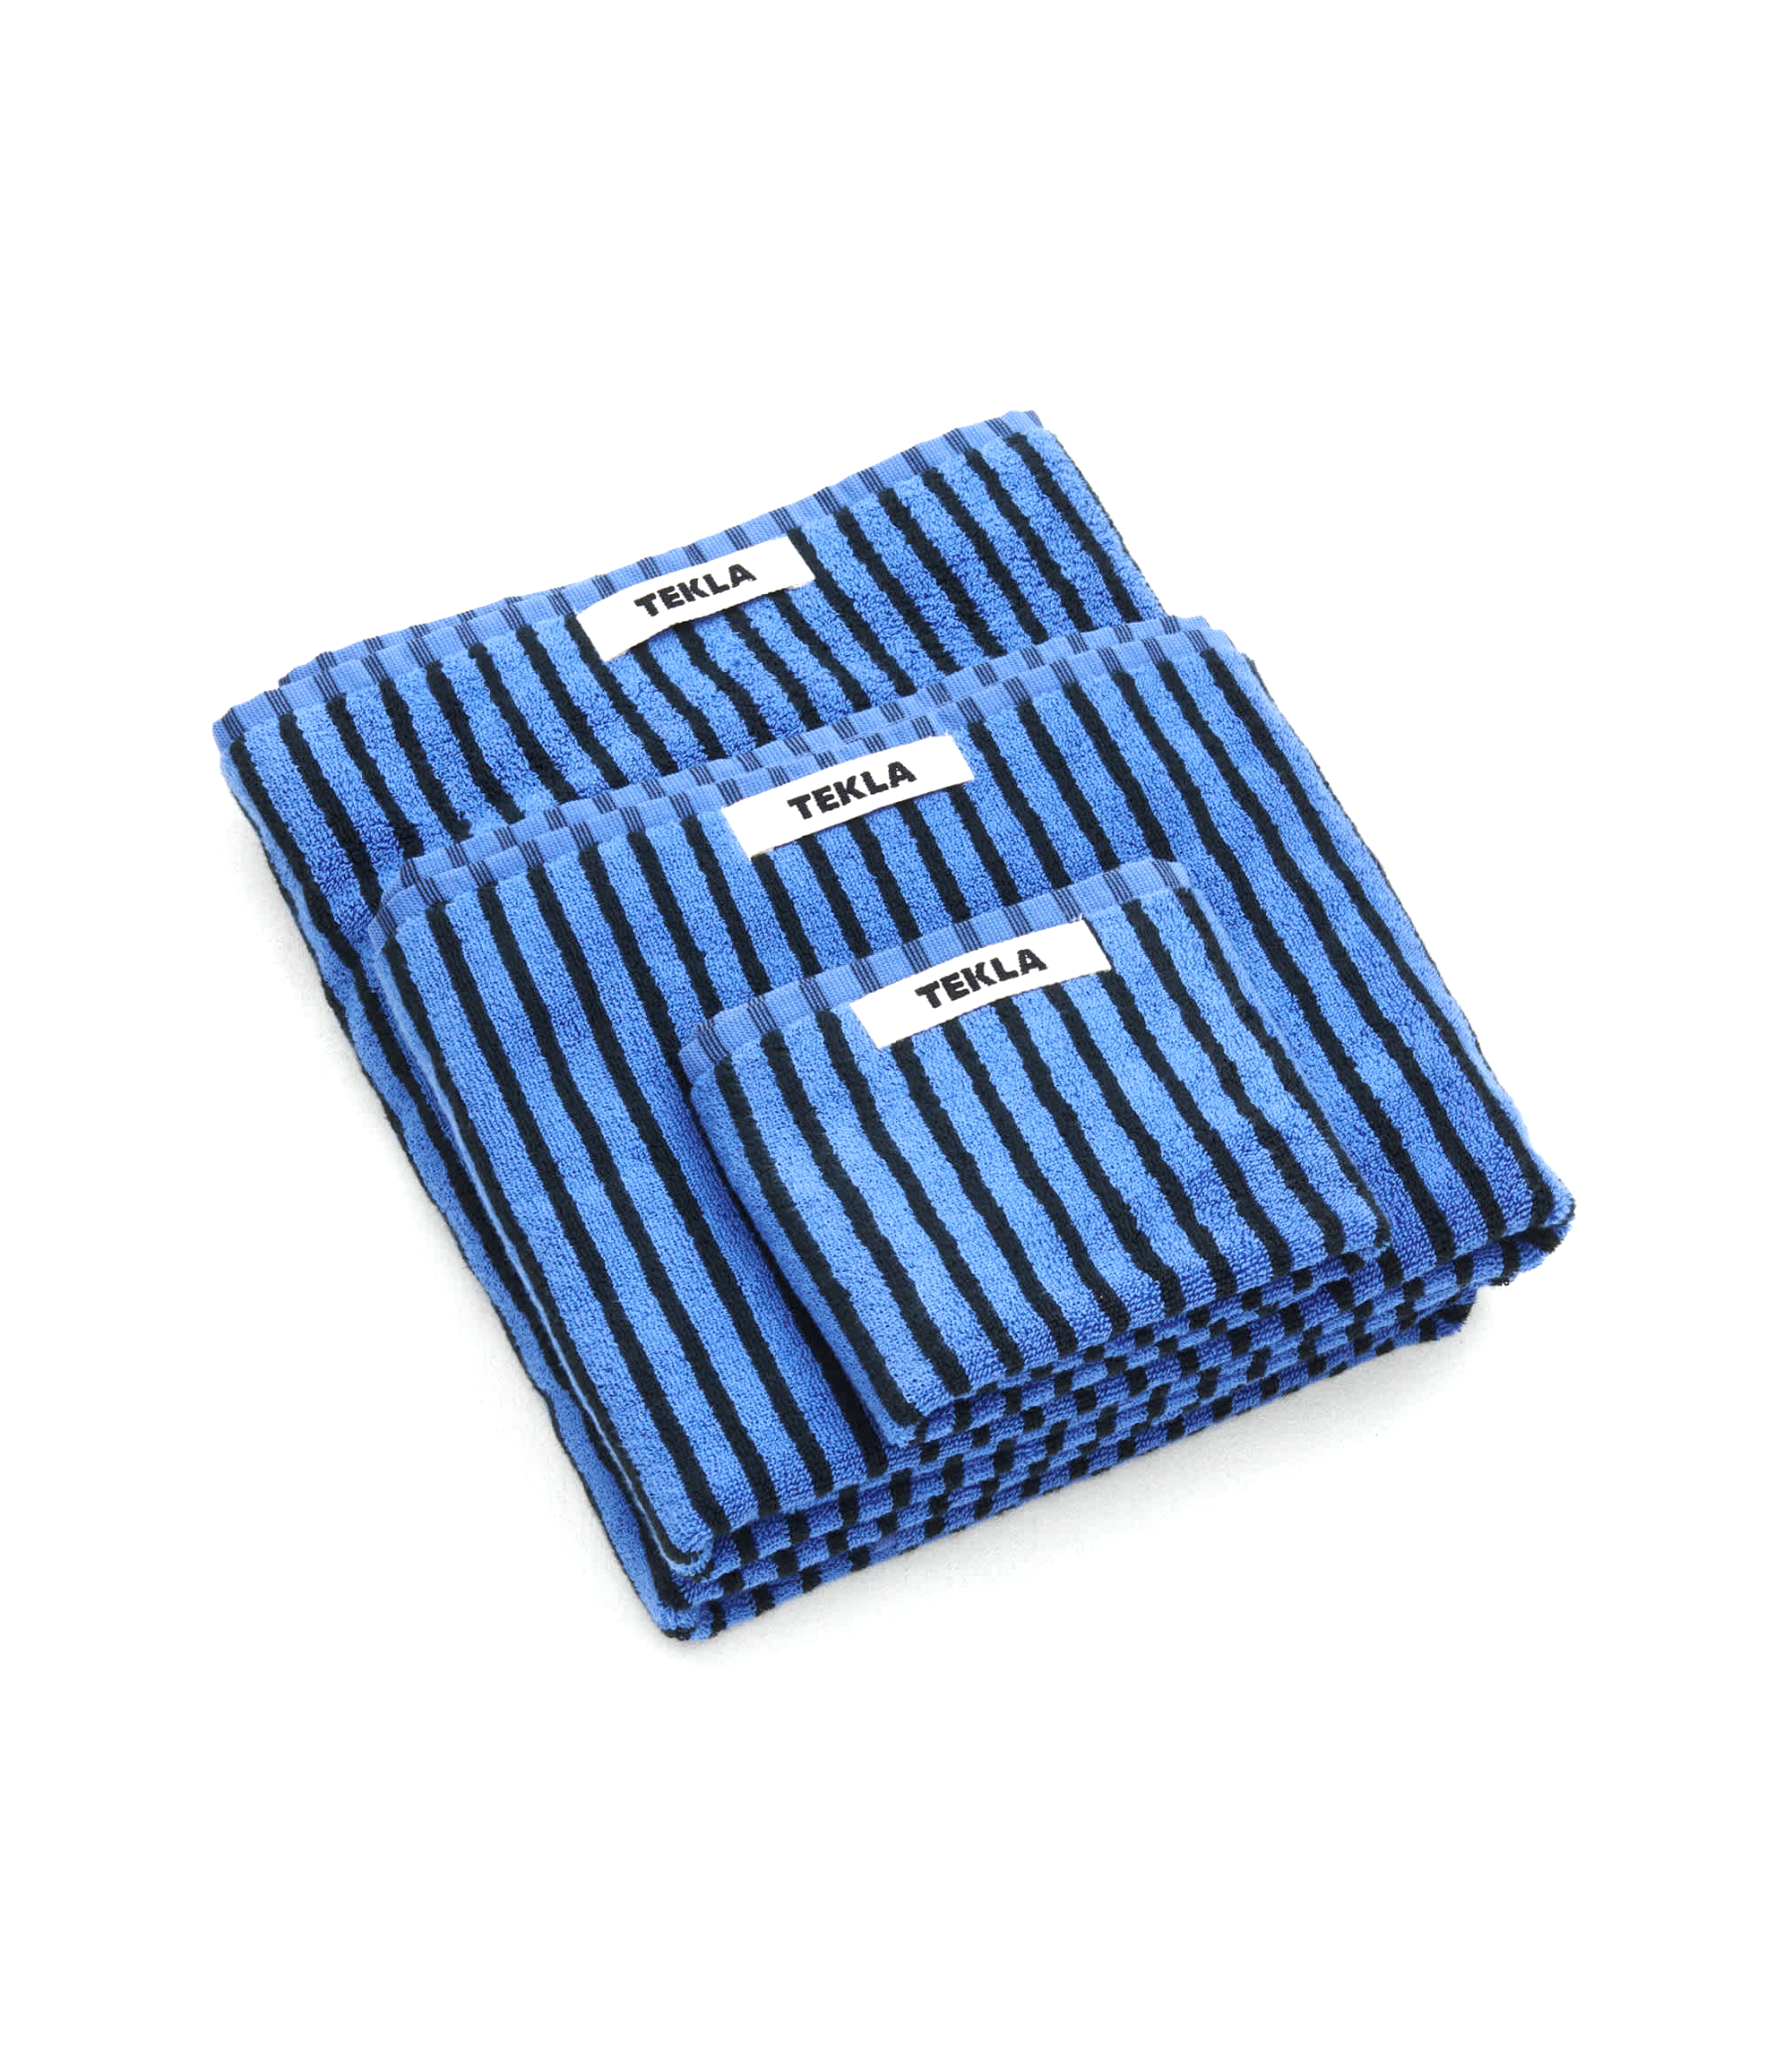 Bath Towel (Striped) - Blue / Black